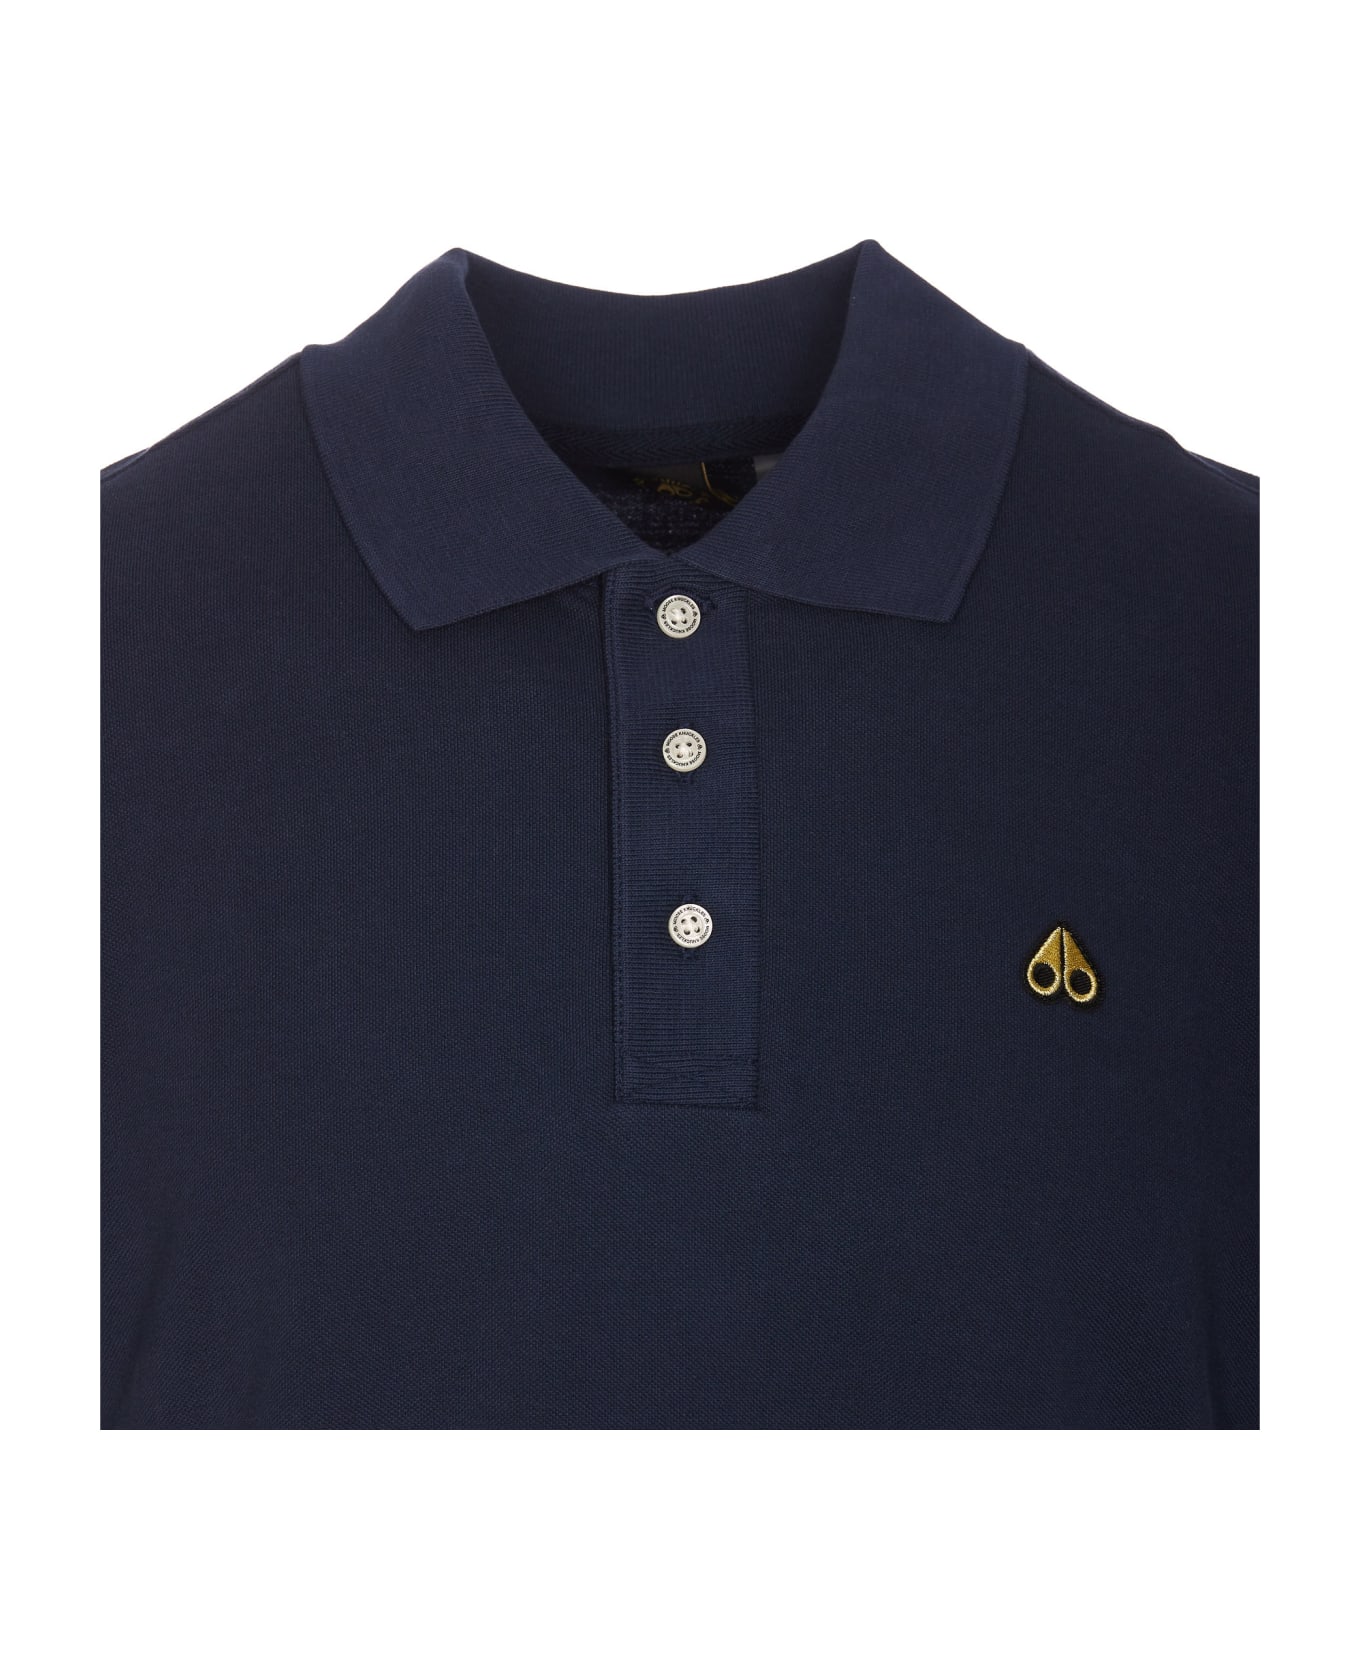 Moose Knuckles Logo Polo Shirt - Blue